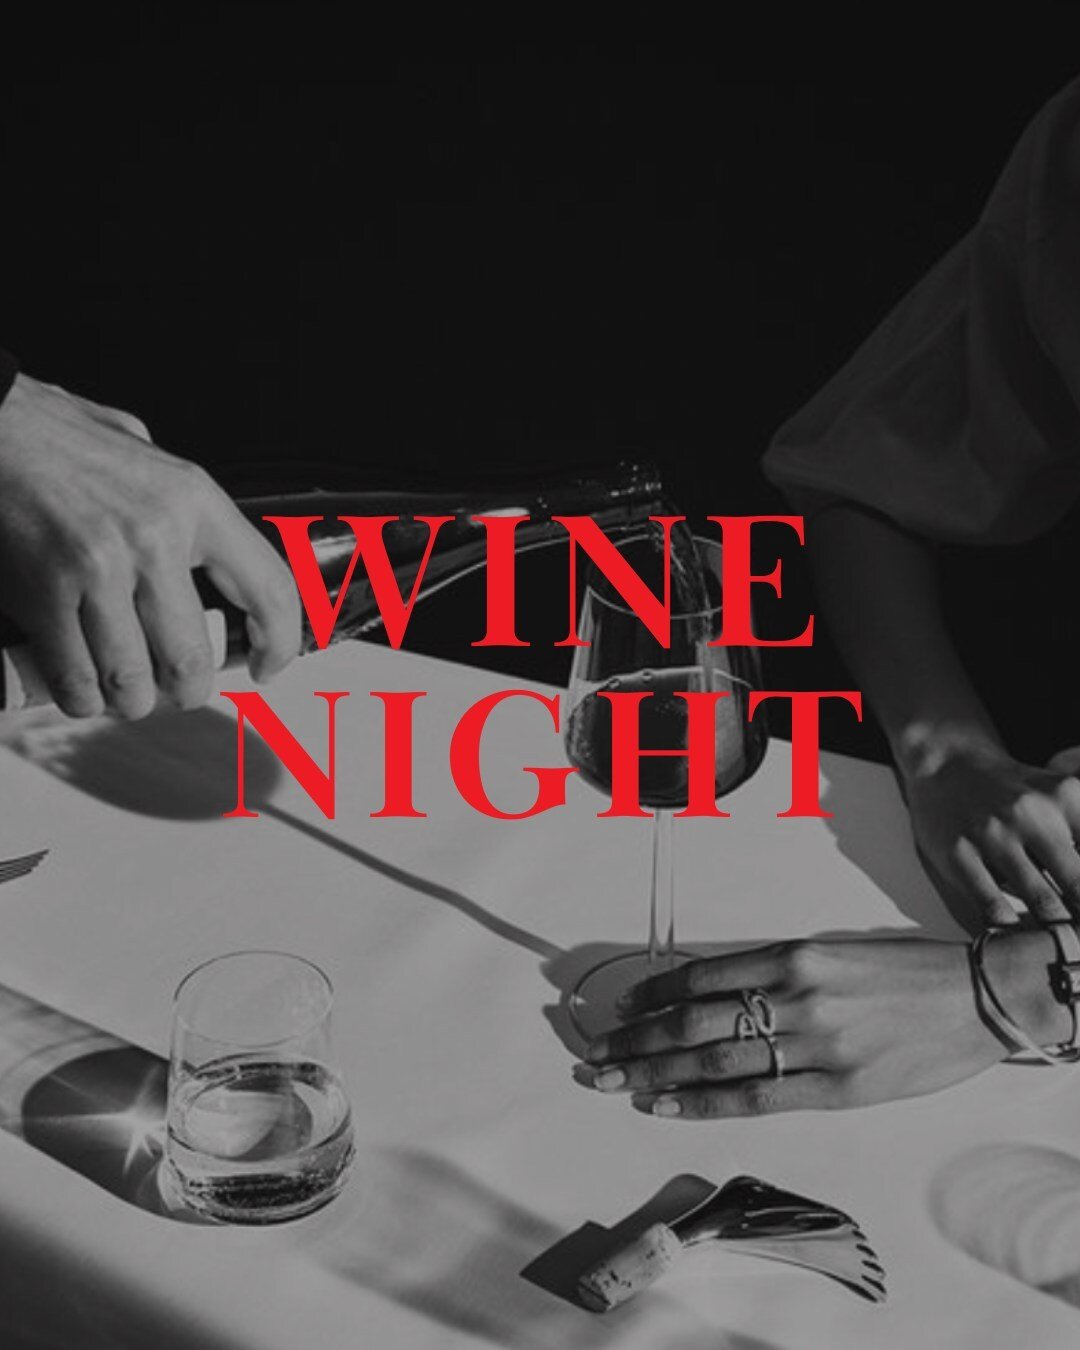 A glass of vino in hand is what tonight calls for 🍷⁠
.⁠
.⁠
.⁠
.⁠
#baritalia #cleveland #beachwoodohio #lakewoodohio #orlandoflorida #italianfood #italiancuisine #foodlover #restaurant #eeeeeats #foodie #wine #winelover #winenight